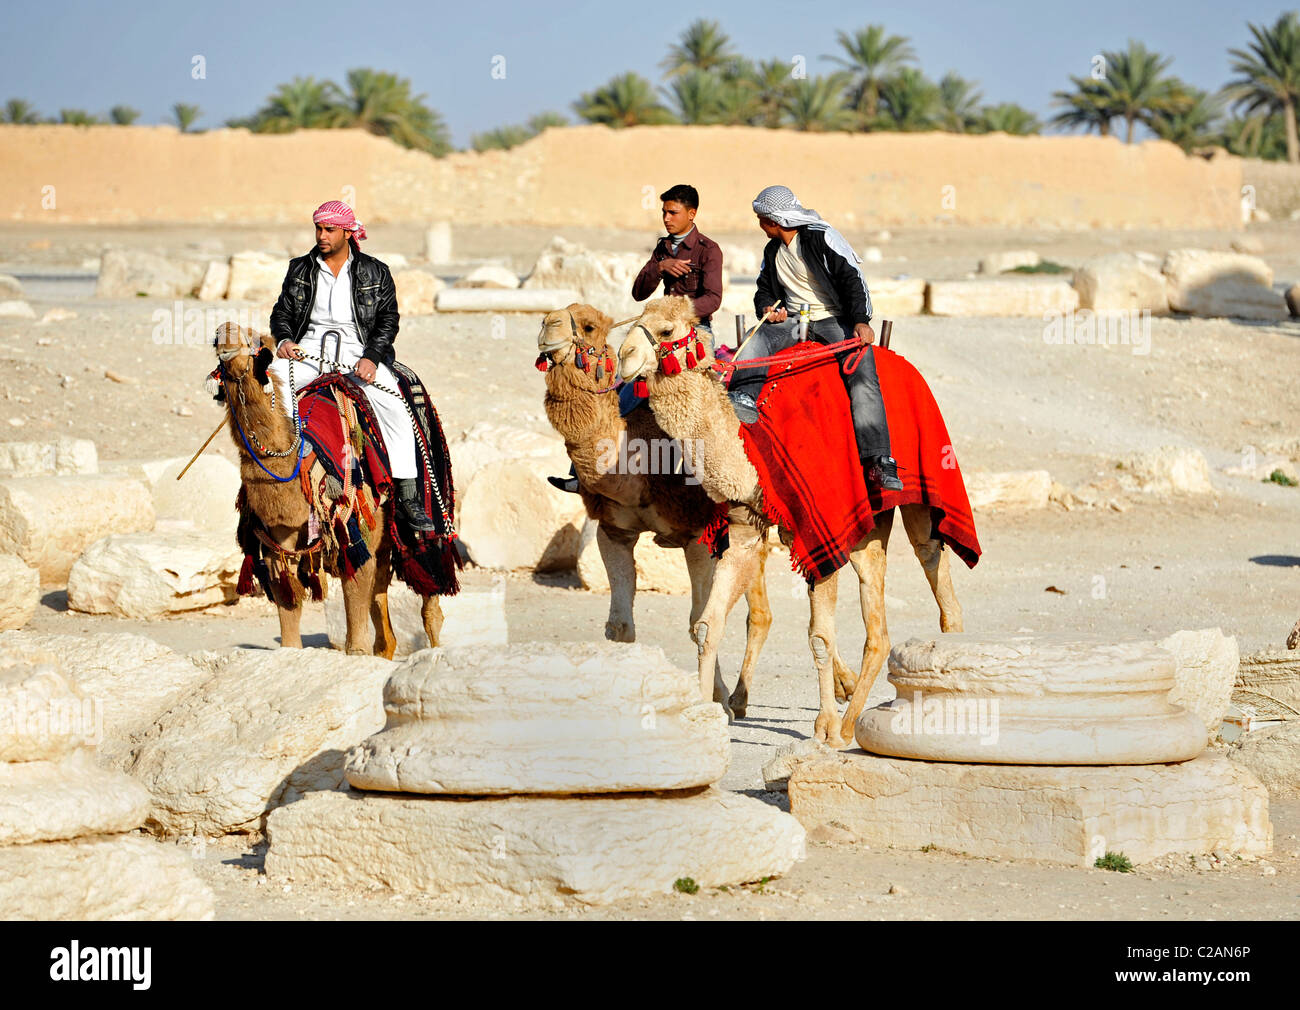 Trois hommes rides chameaux à Palmyra, Syrie le 4 mars 2011. Männer auf Kamelen an den Ruinen von Säulen, Palmyra, Syrie am 4. Mä Banque D'Images